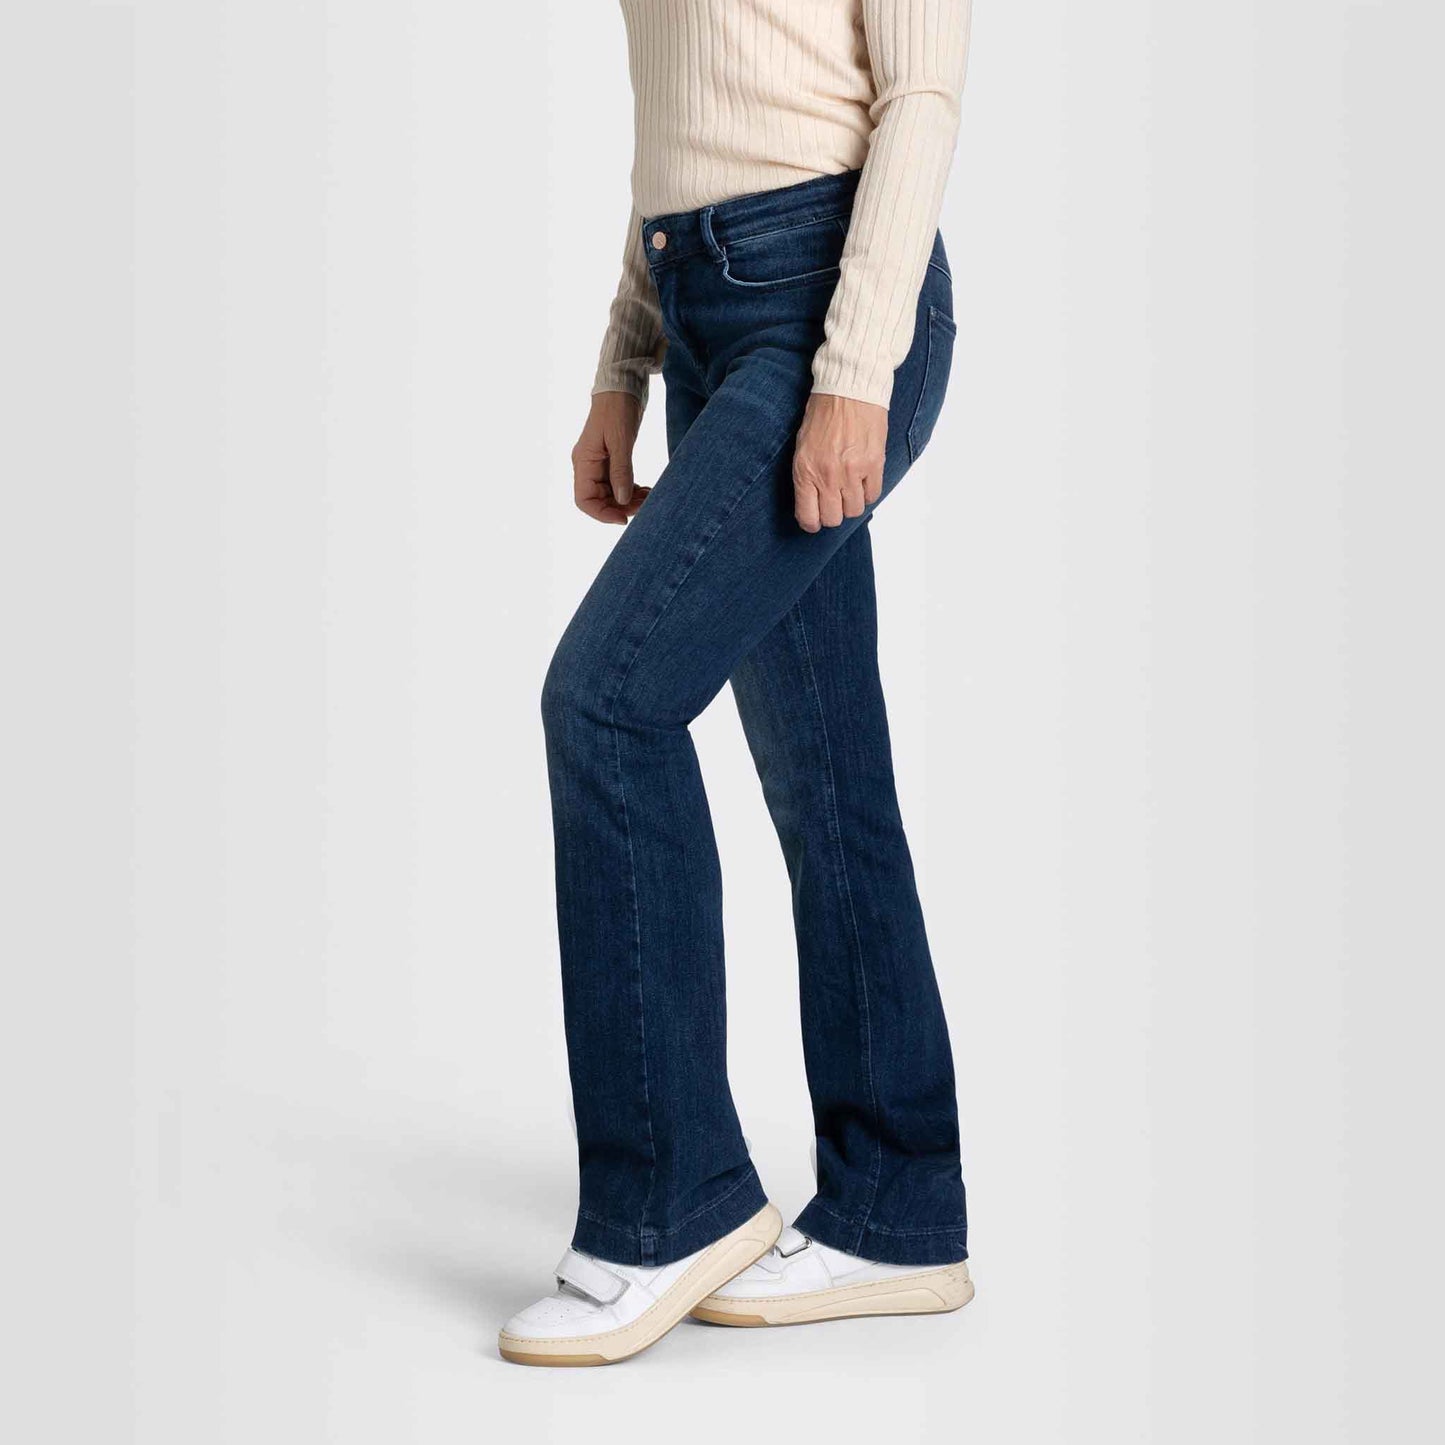 kleding lange vrouwen mac jeans dream boot auth cobalt